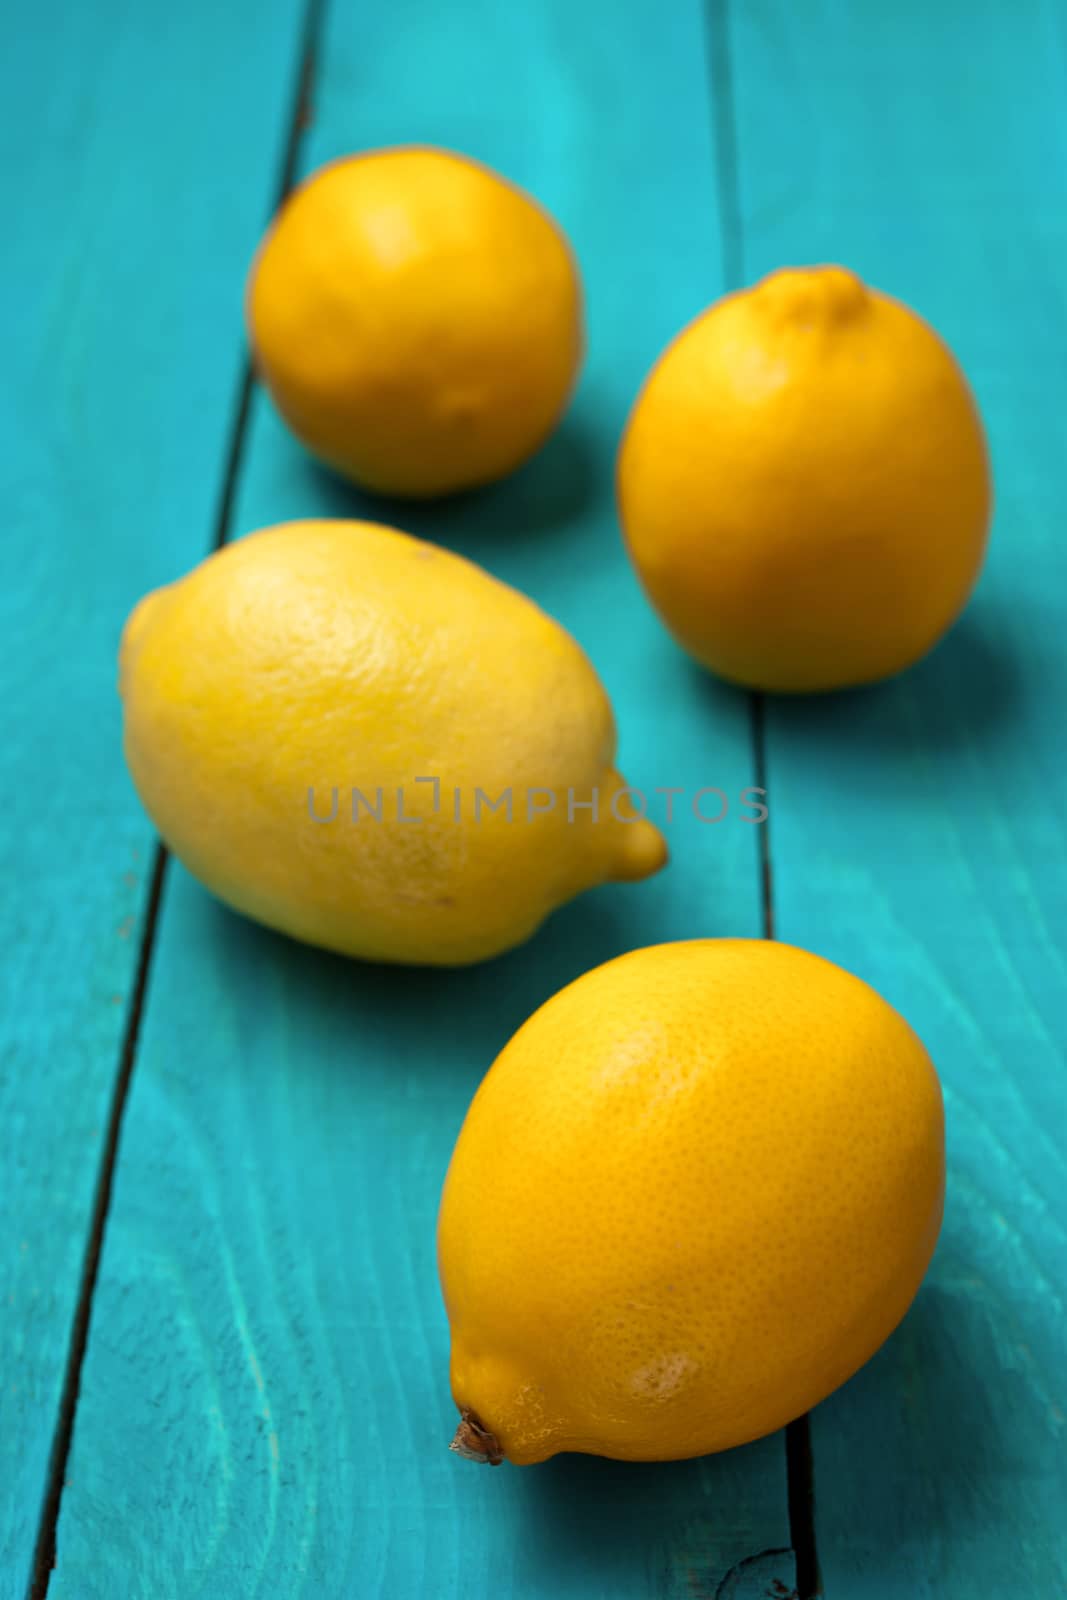 Lemons on the bright cyan background by Deniskarpenkov